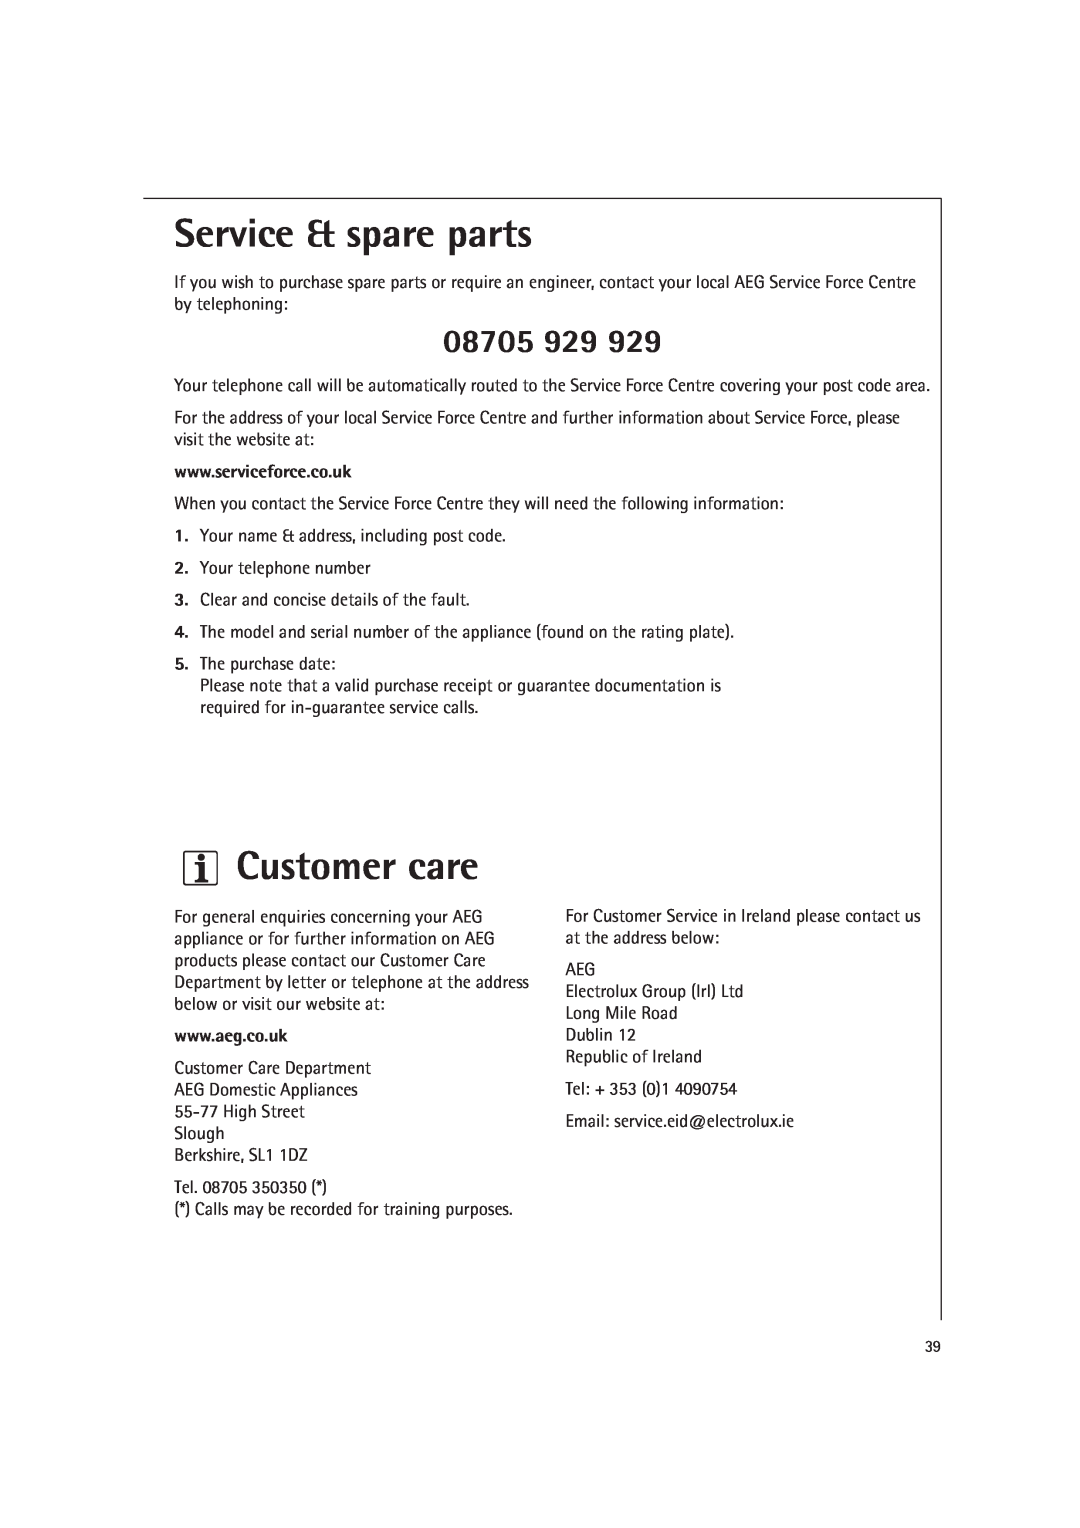 AEG MC2660E operating instructions Service & spare parts, Customer care, 08705 